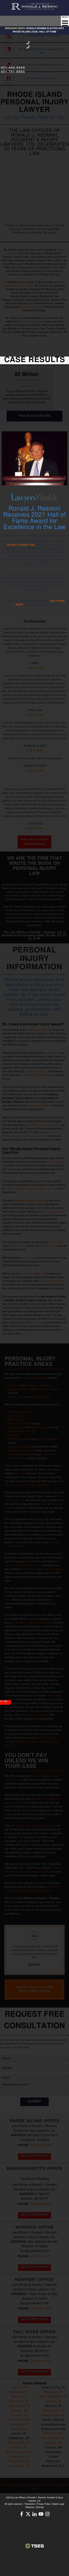 Ronald J. Resmini Law Offices, Ltd. - Seekonk MA Lawyers